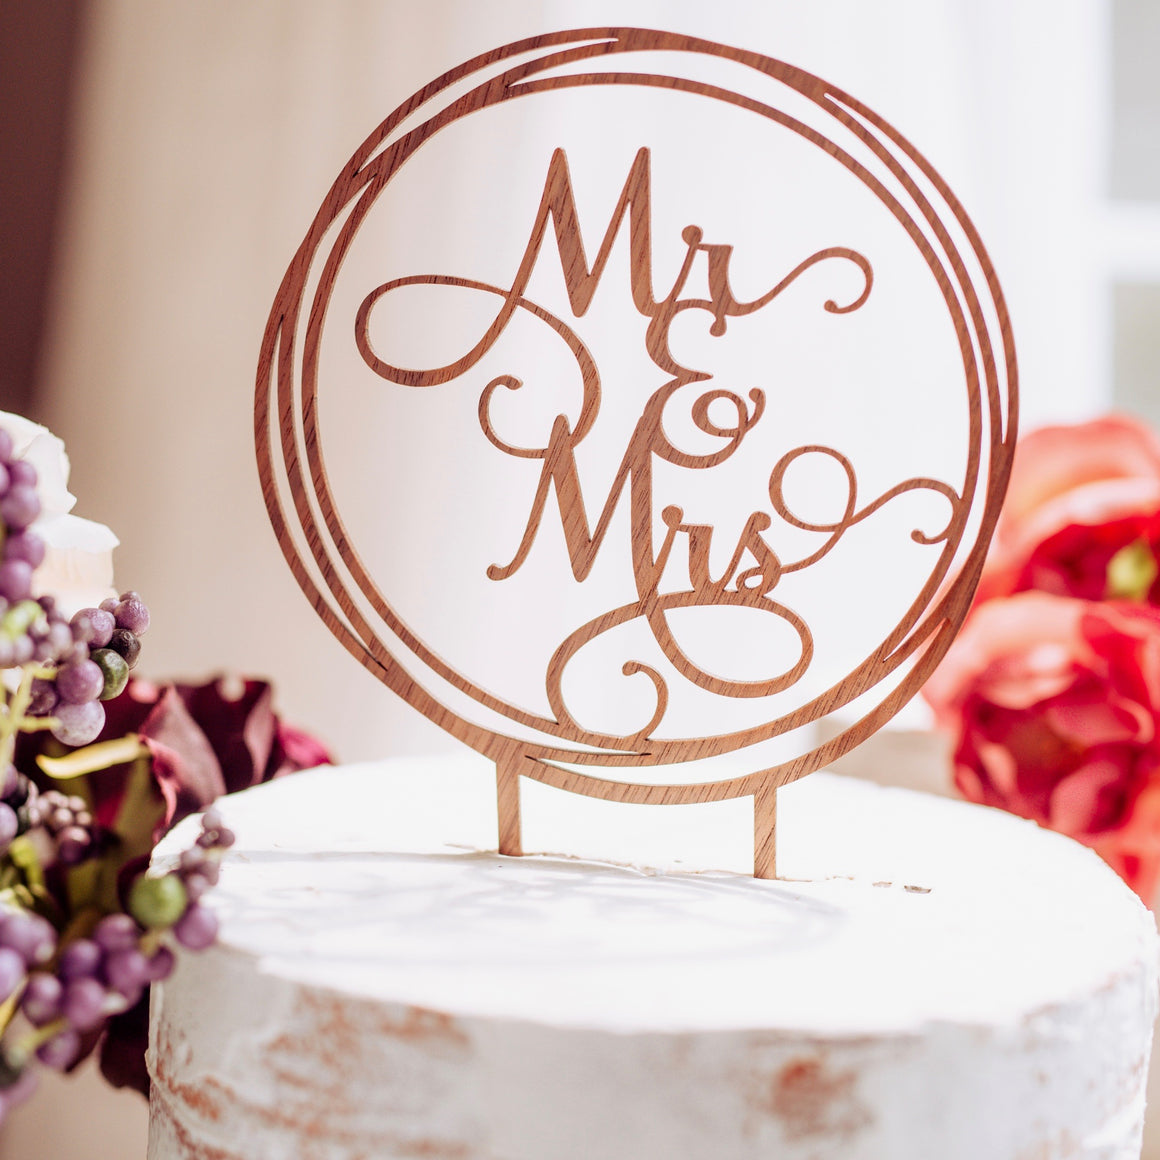 Mr & Mrs Wedding Cake Topper in Dark Wood